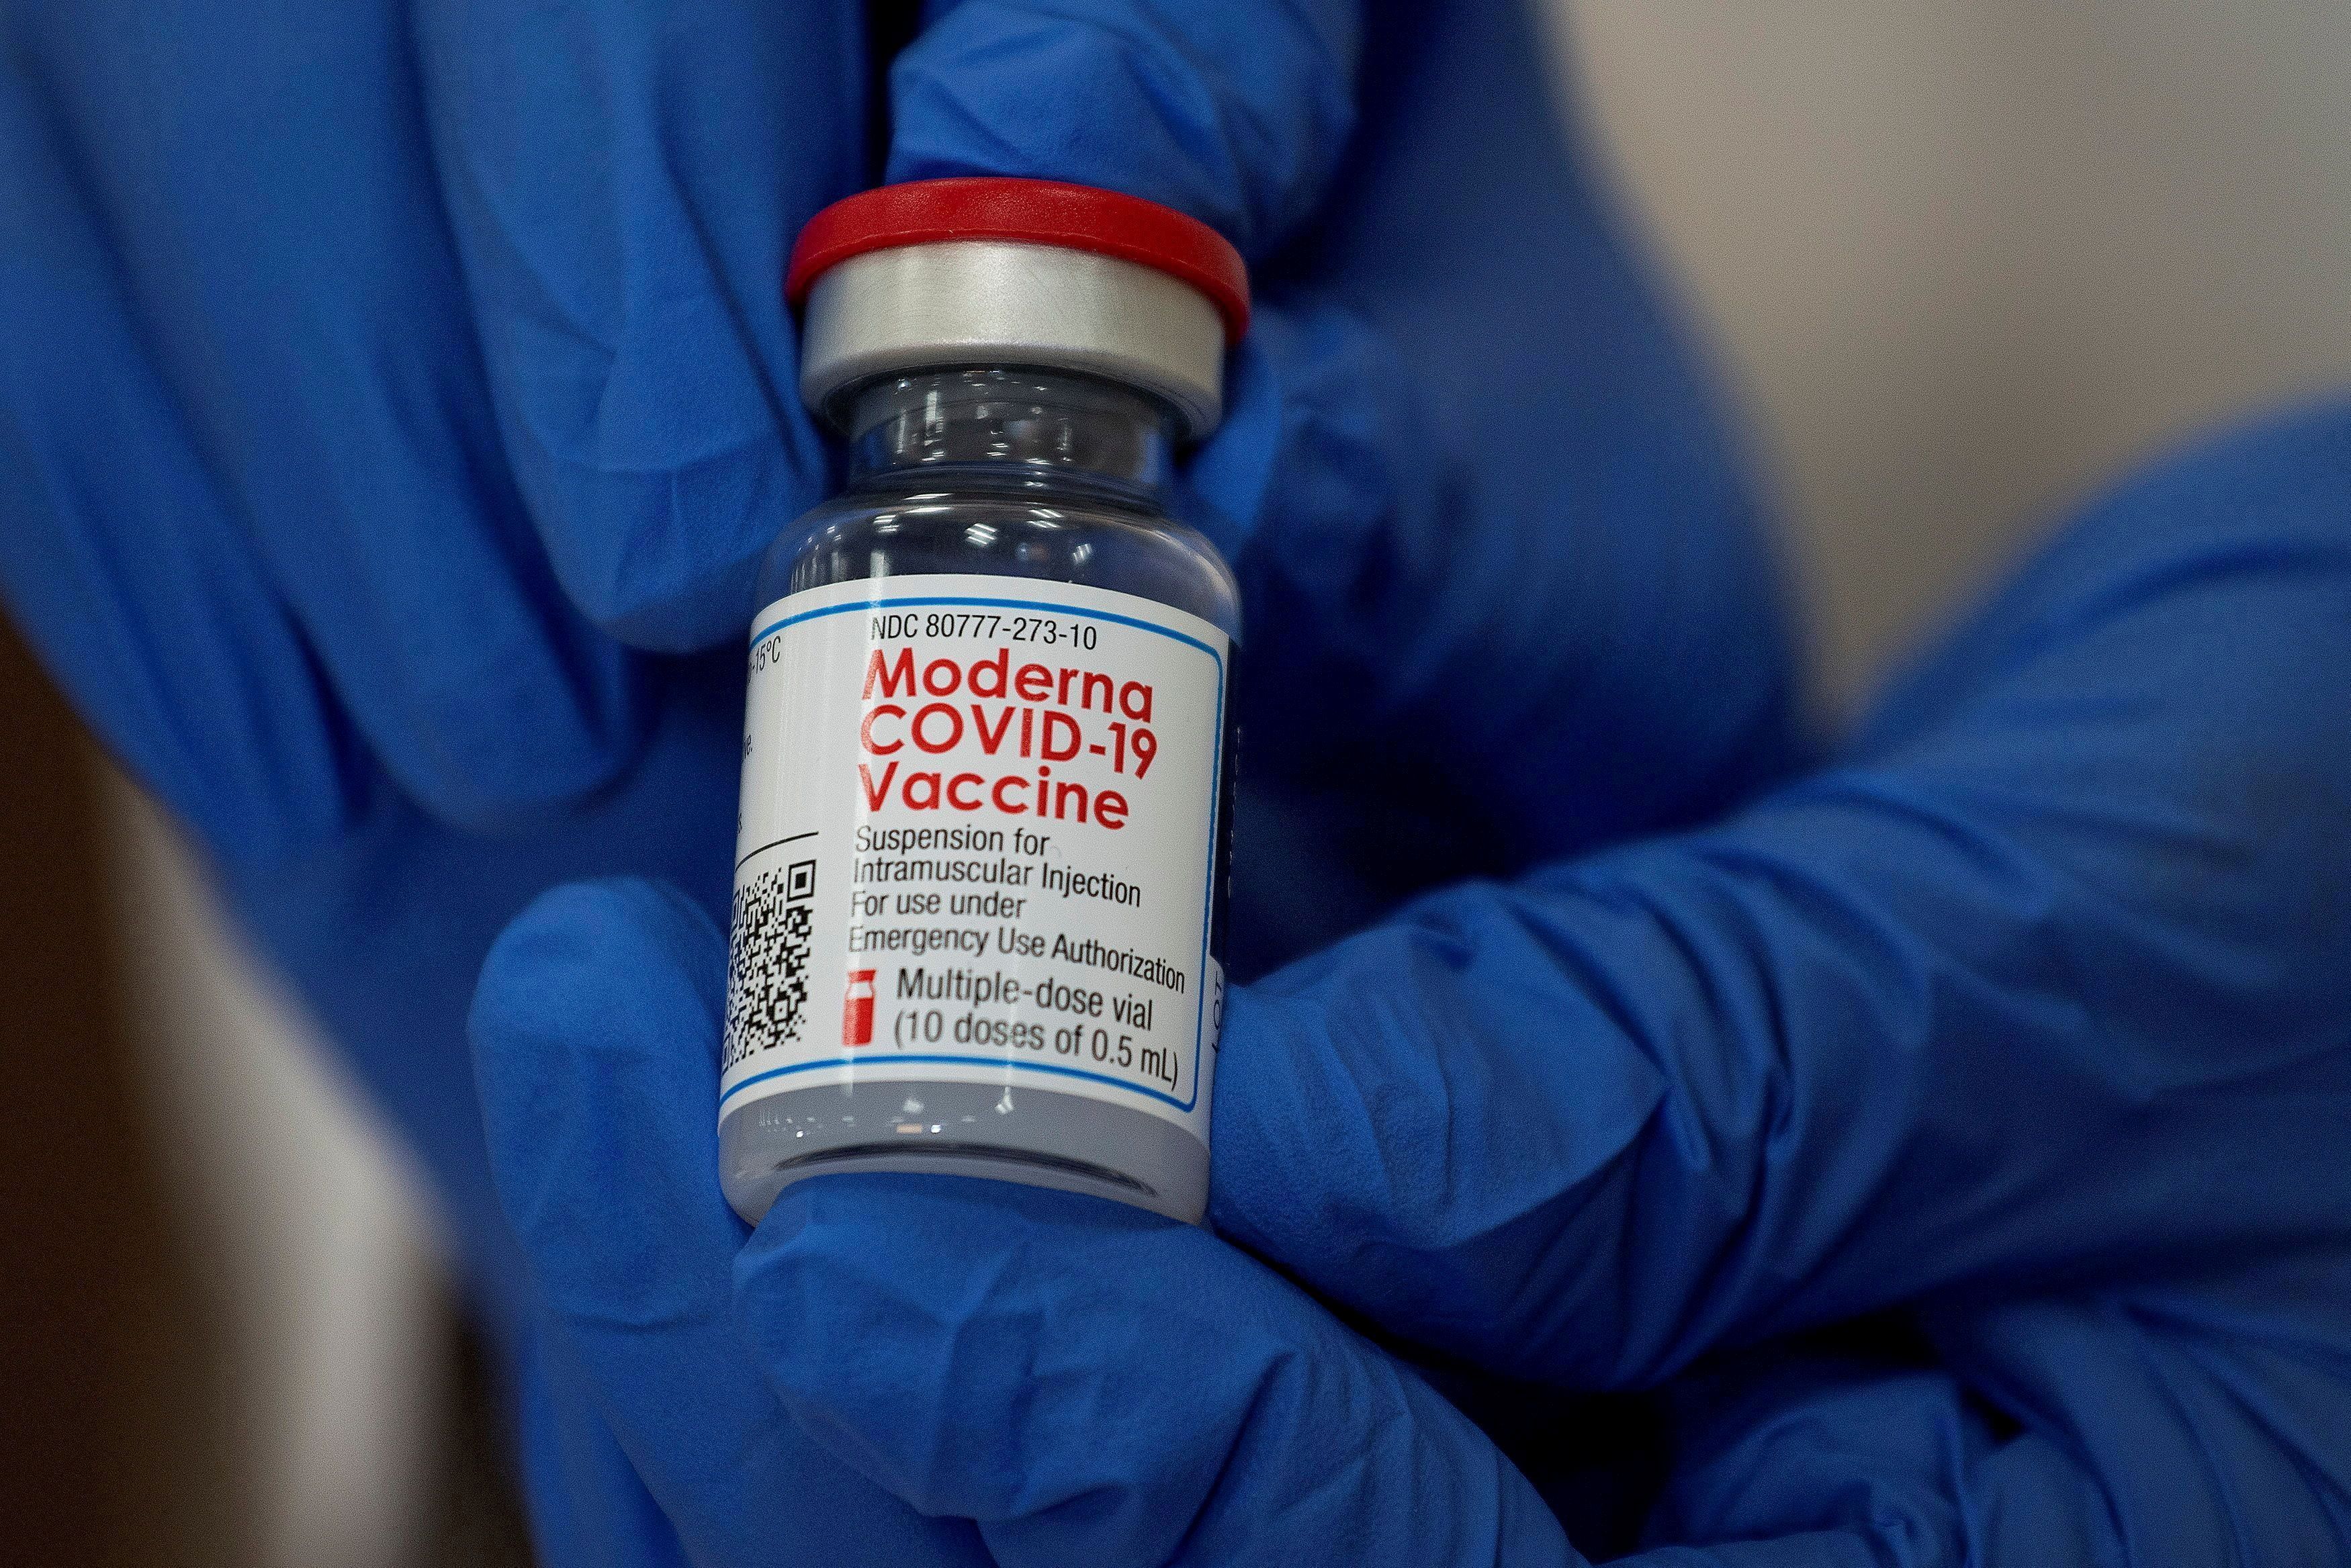   An employee shows the Moderna COVID-19 vaccine at Northwell Health's Long Island Jewish Valley Stream hospital in New York, U.S., December 21, 2020.   REUTERS/Eduardo Munoz/File Photo